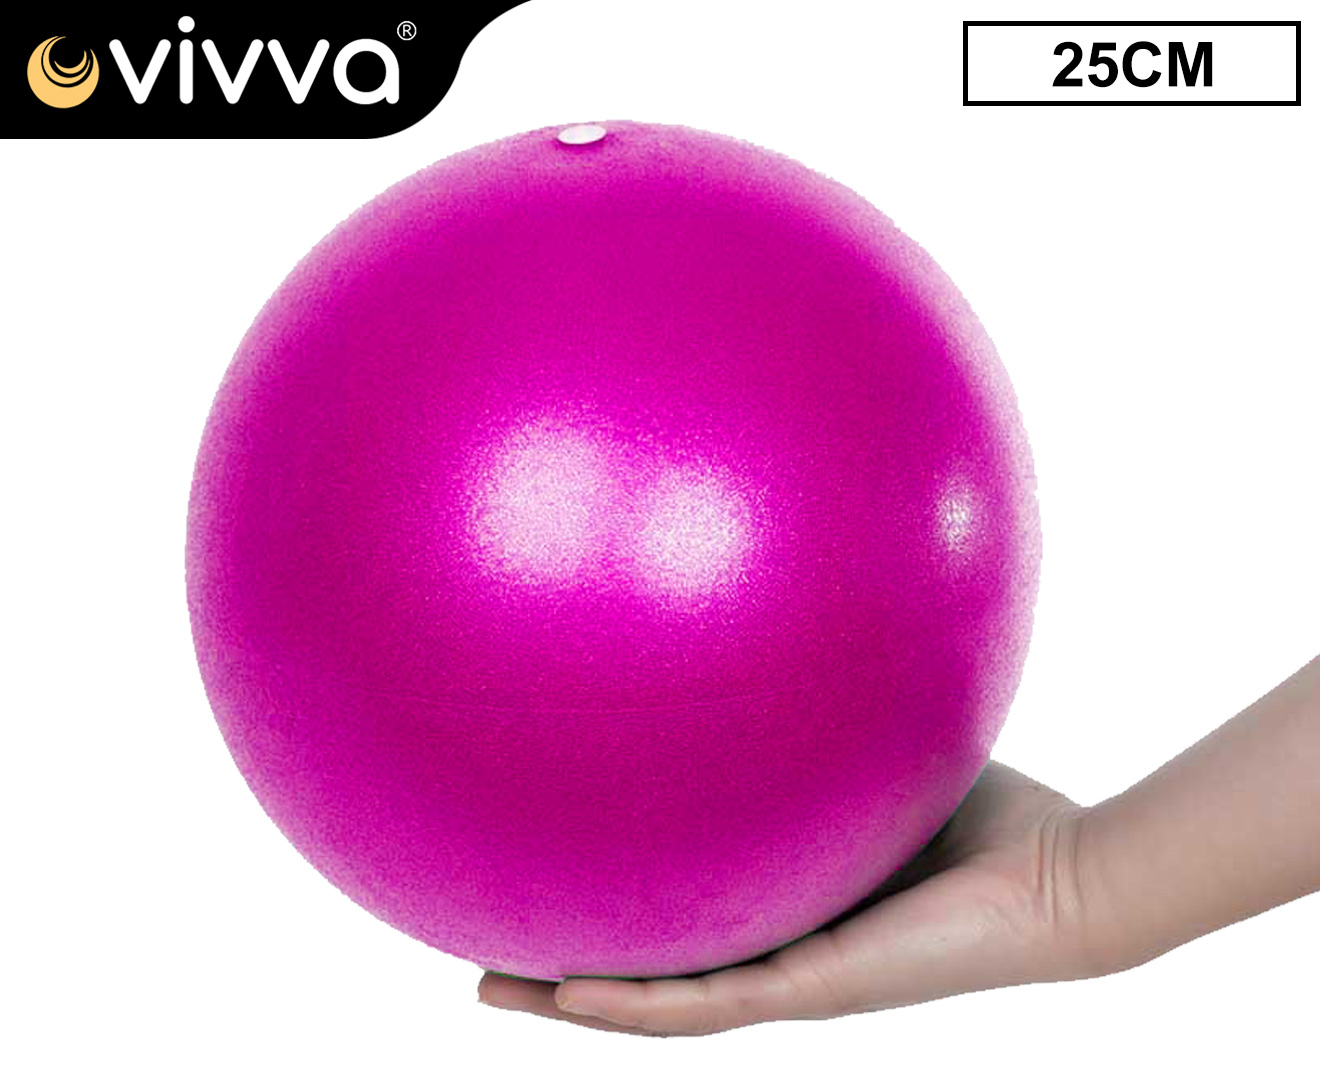 Vivva 25CM Pink Yoga Ball Pilates Fitness Exercise Balls Birthing Stability  Ball Sport Gym